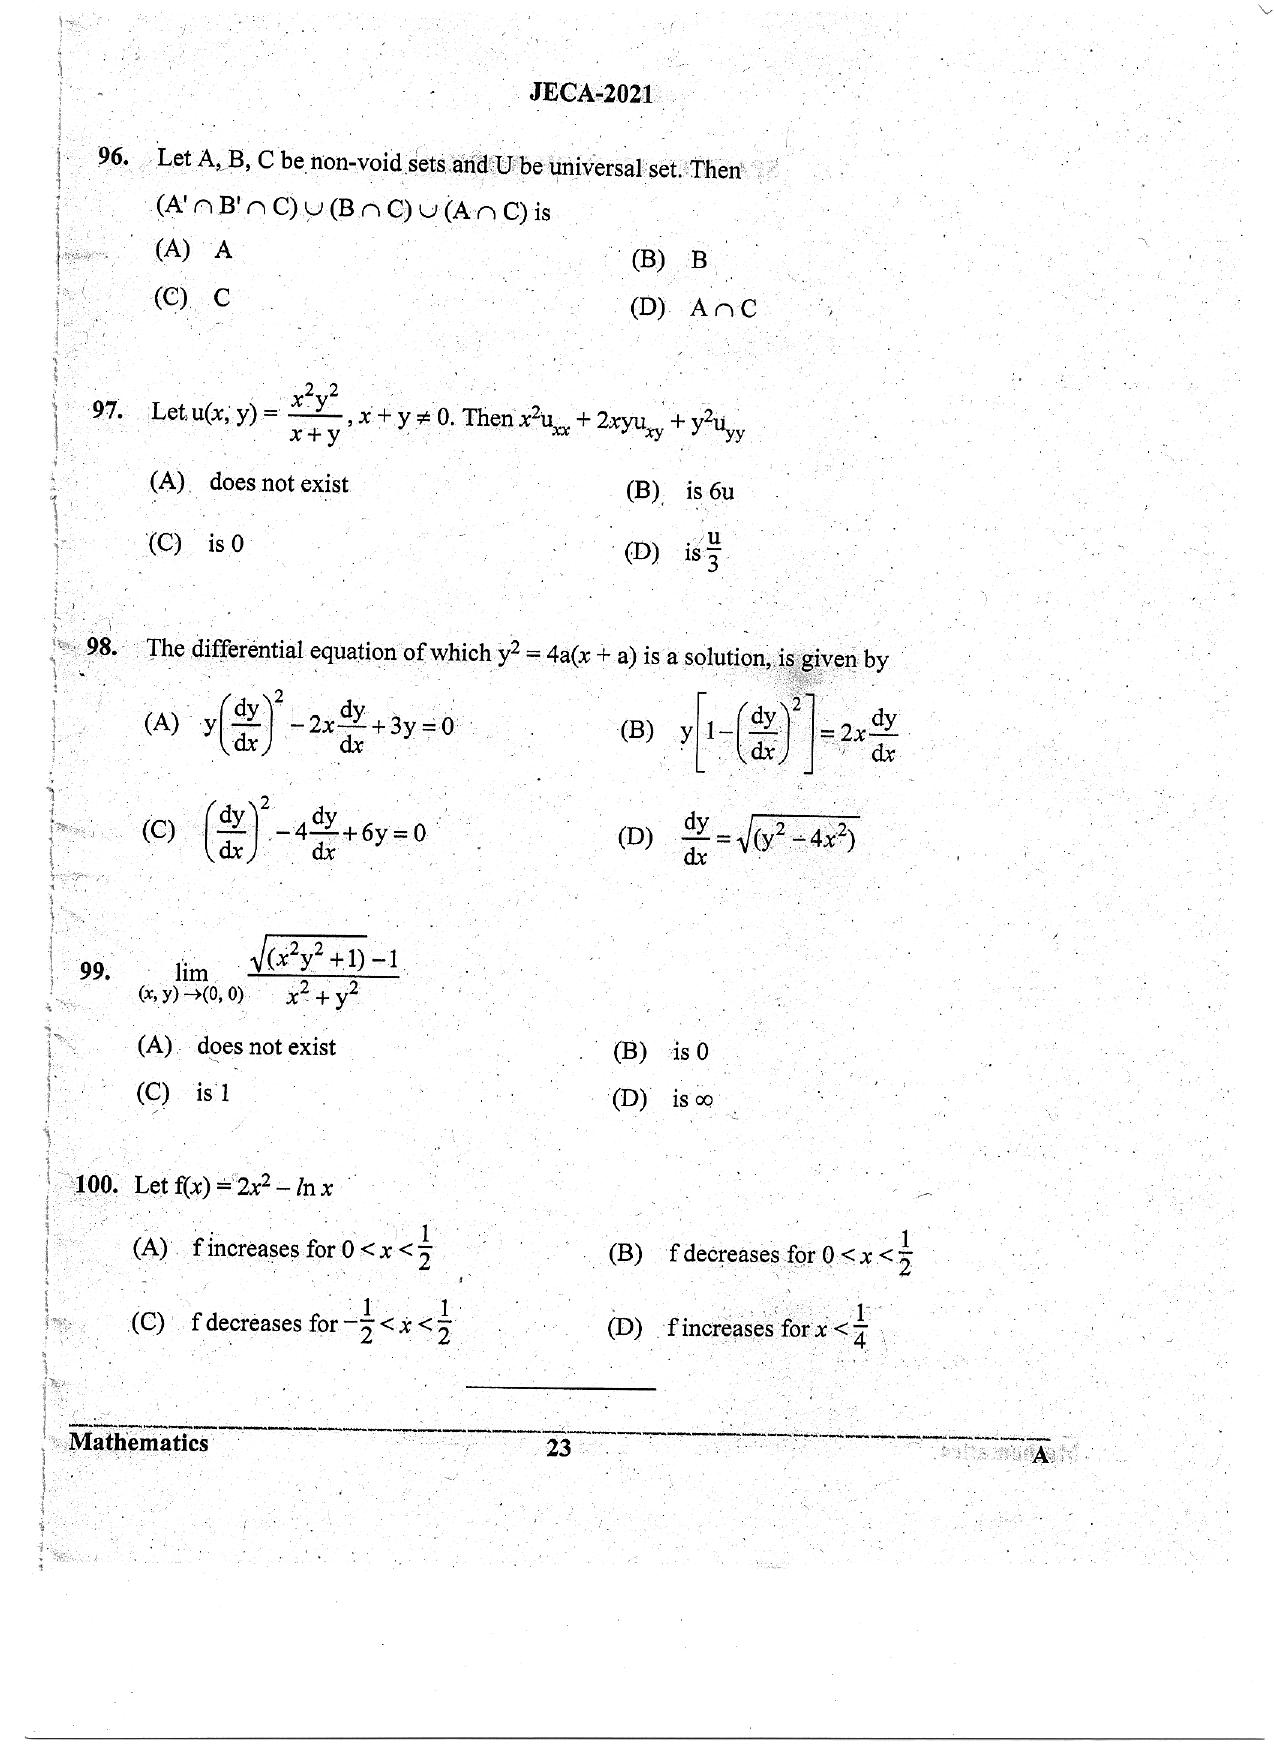 WB JECA 2021 Mathematics Question Paper - Page 23